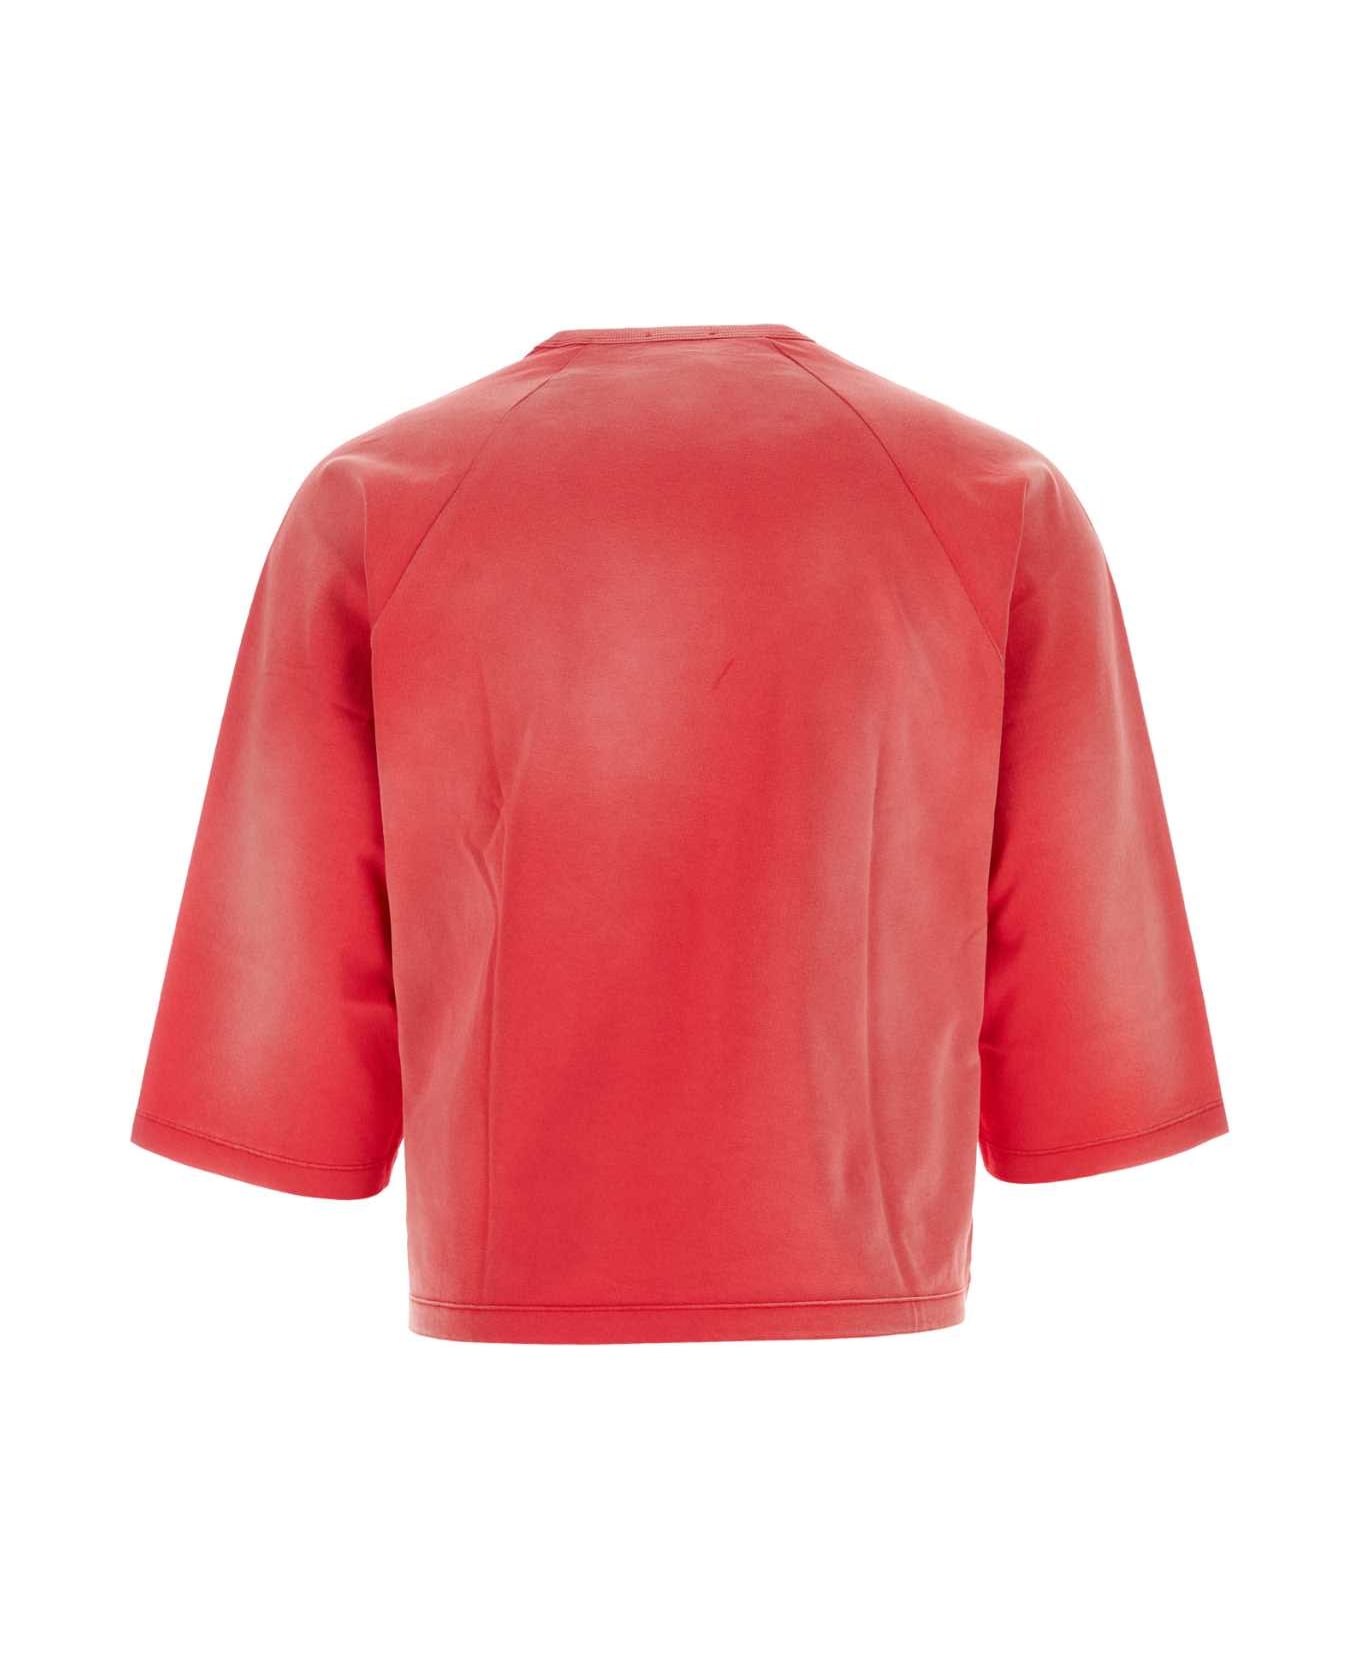 Diesel Red Cotton T-shirt - 41SA シャツ